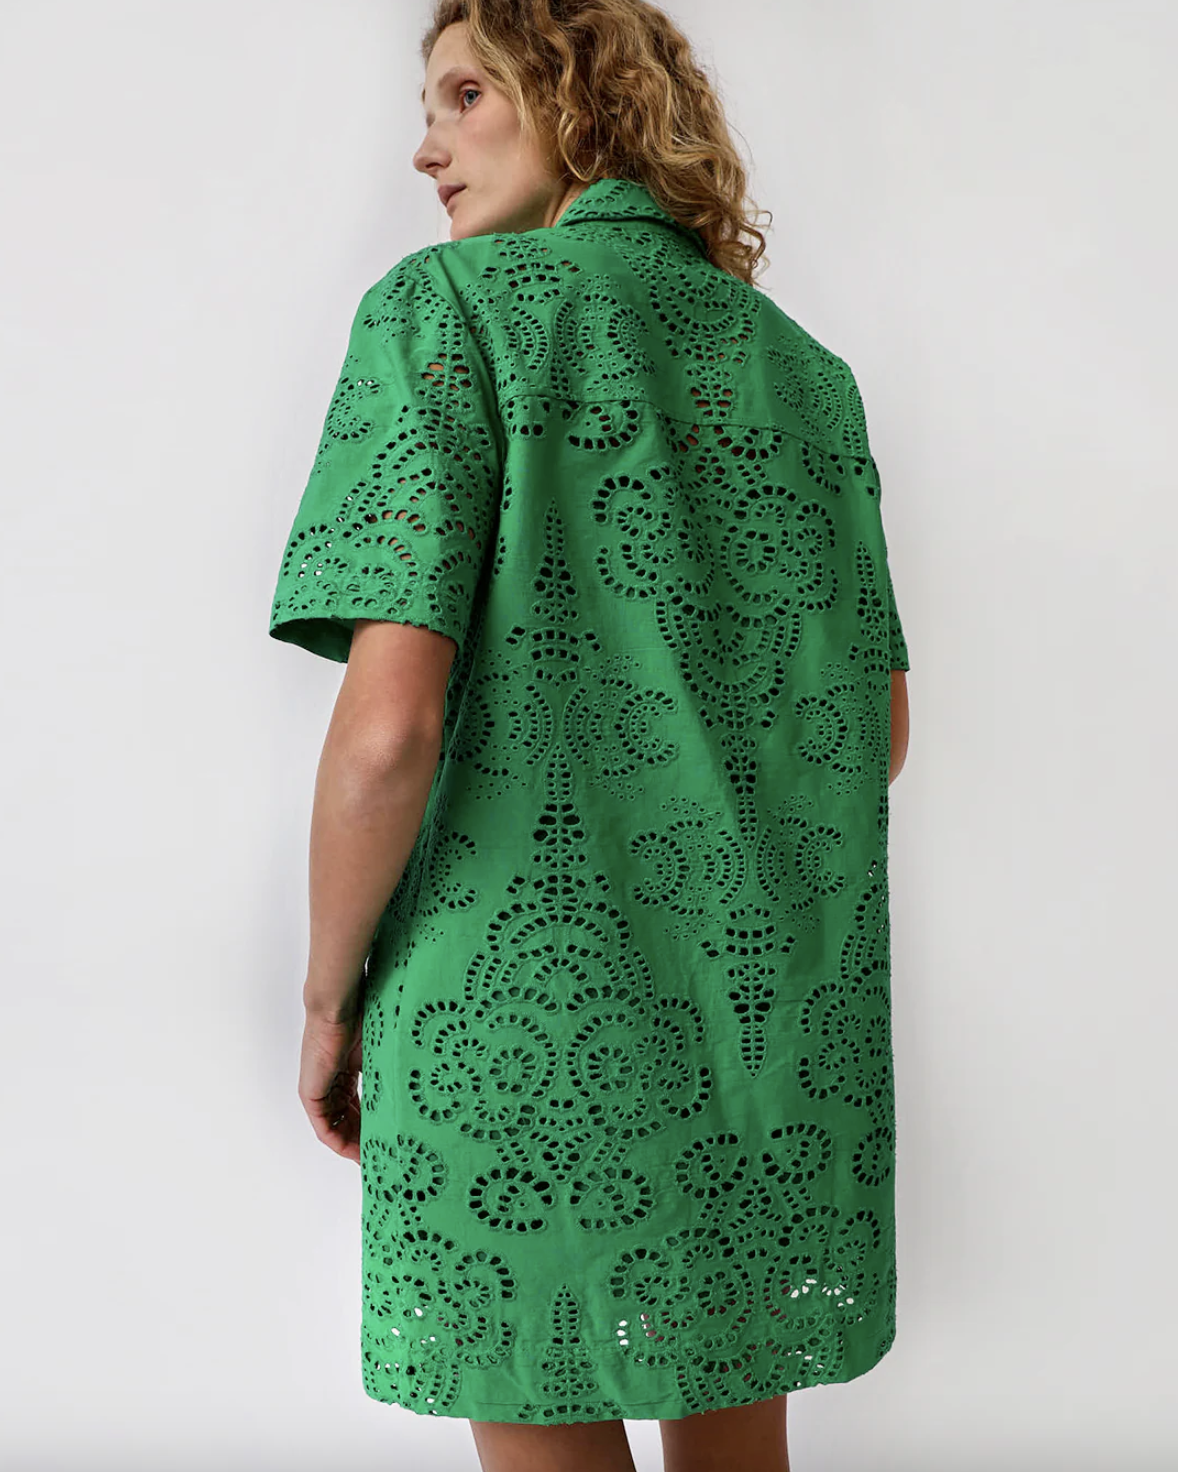 MACK DRESS - Green